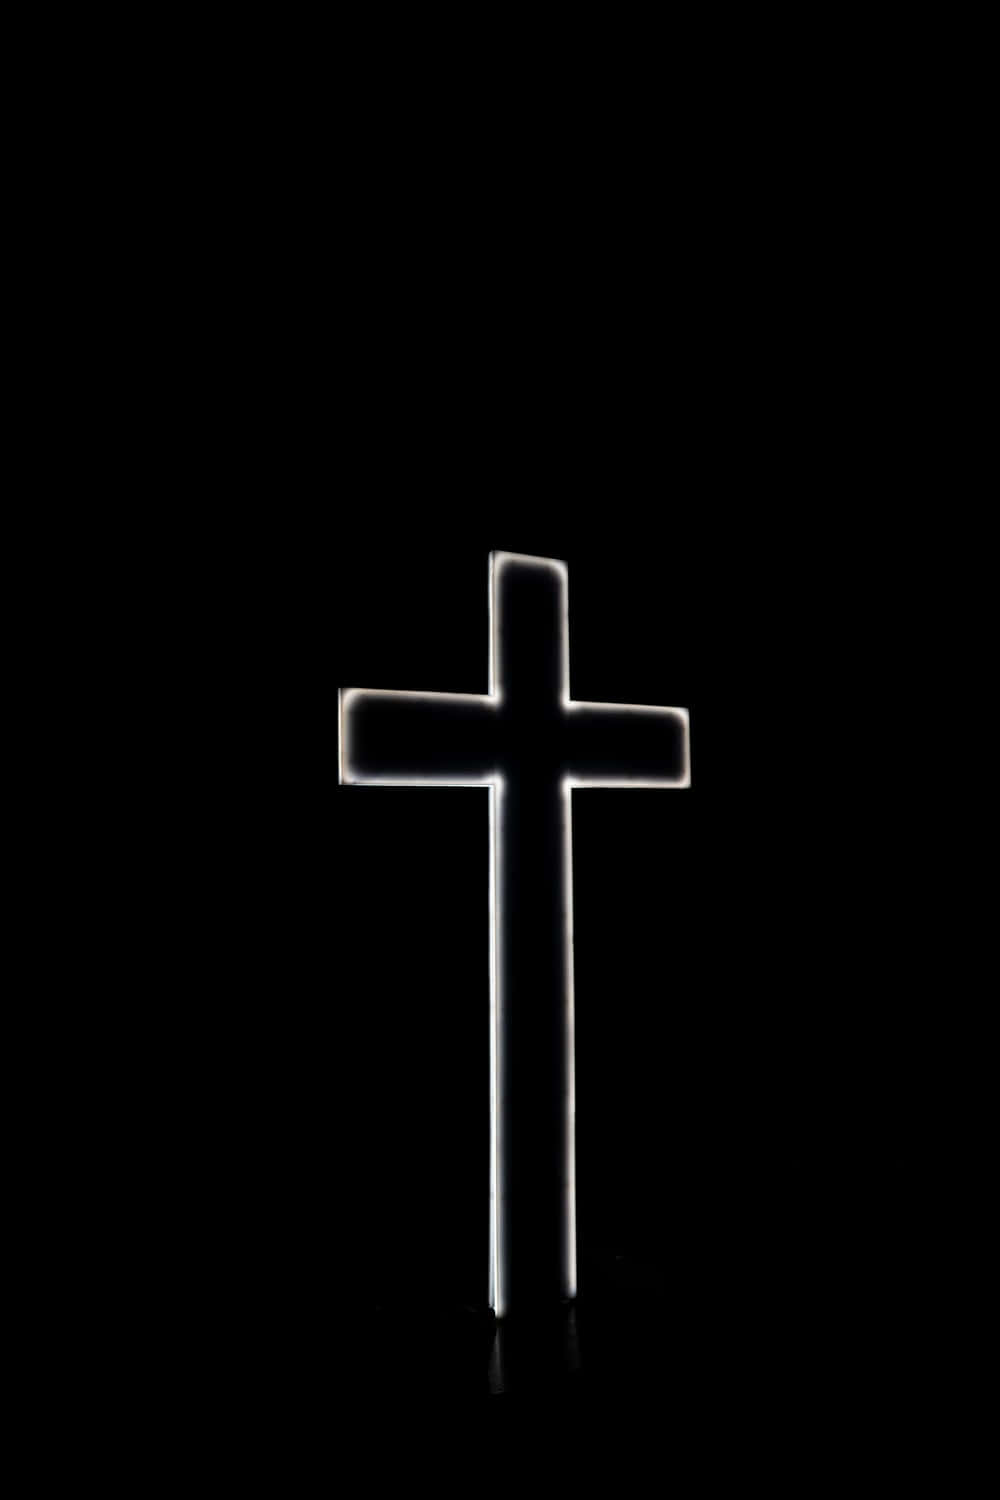 A Cross Is Lit Up In The Dark Wallpaper